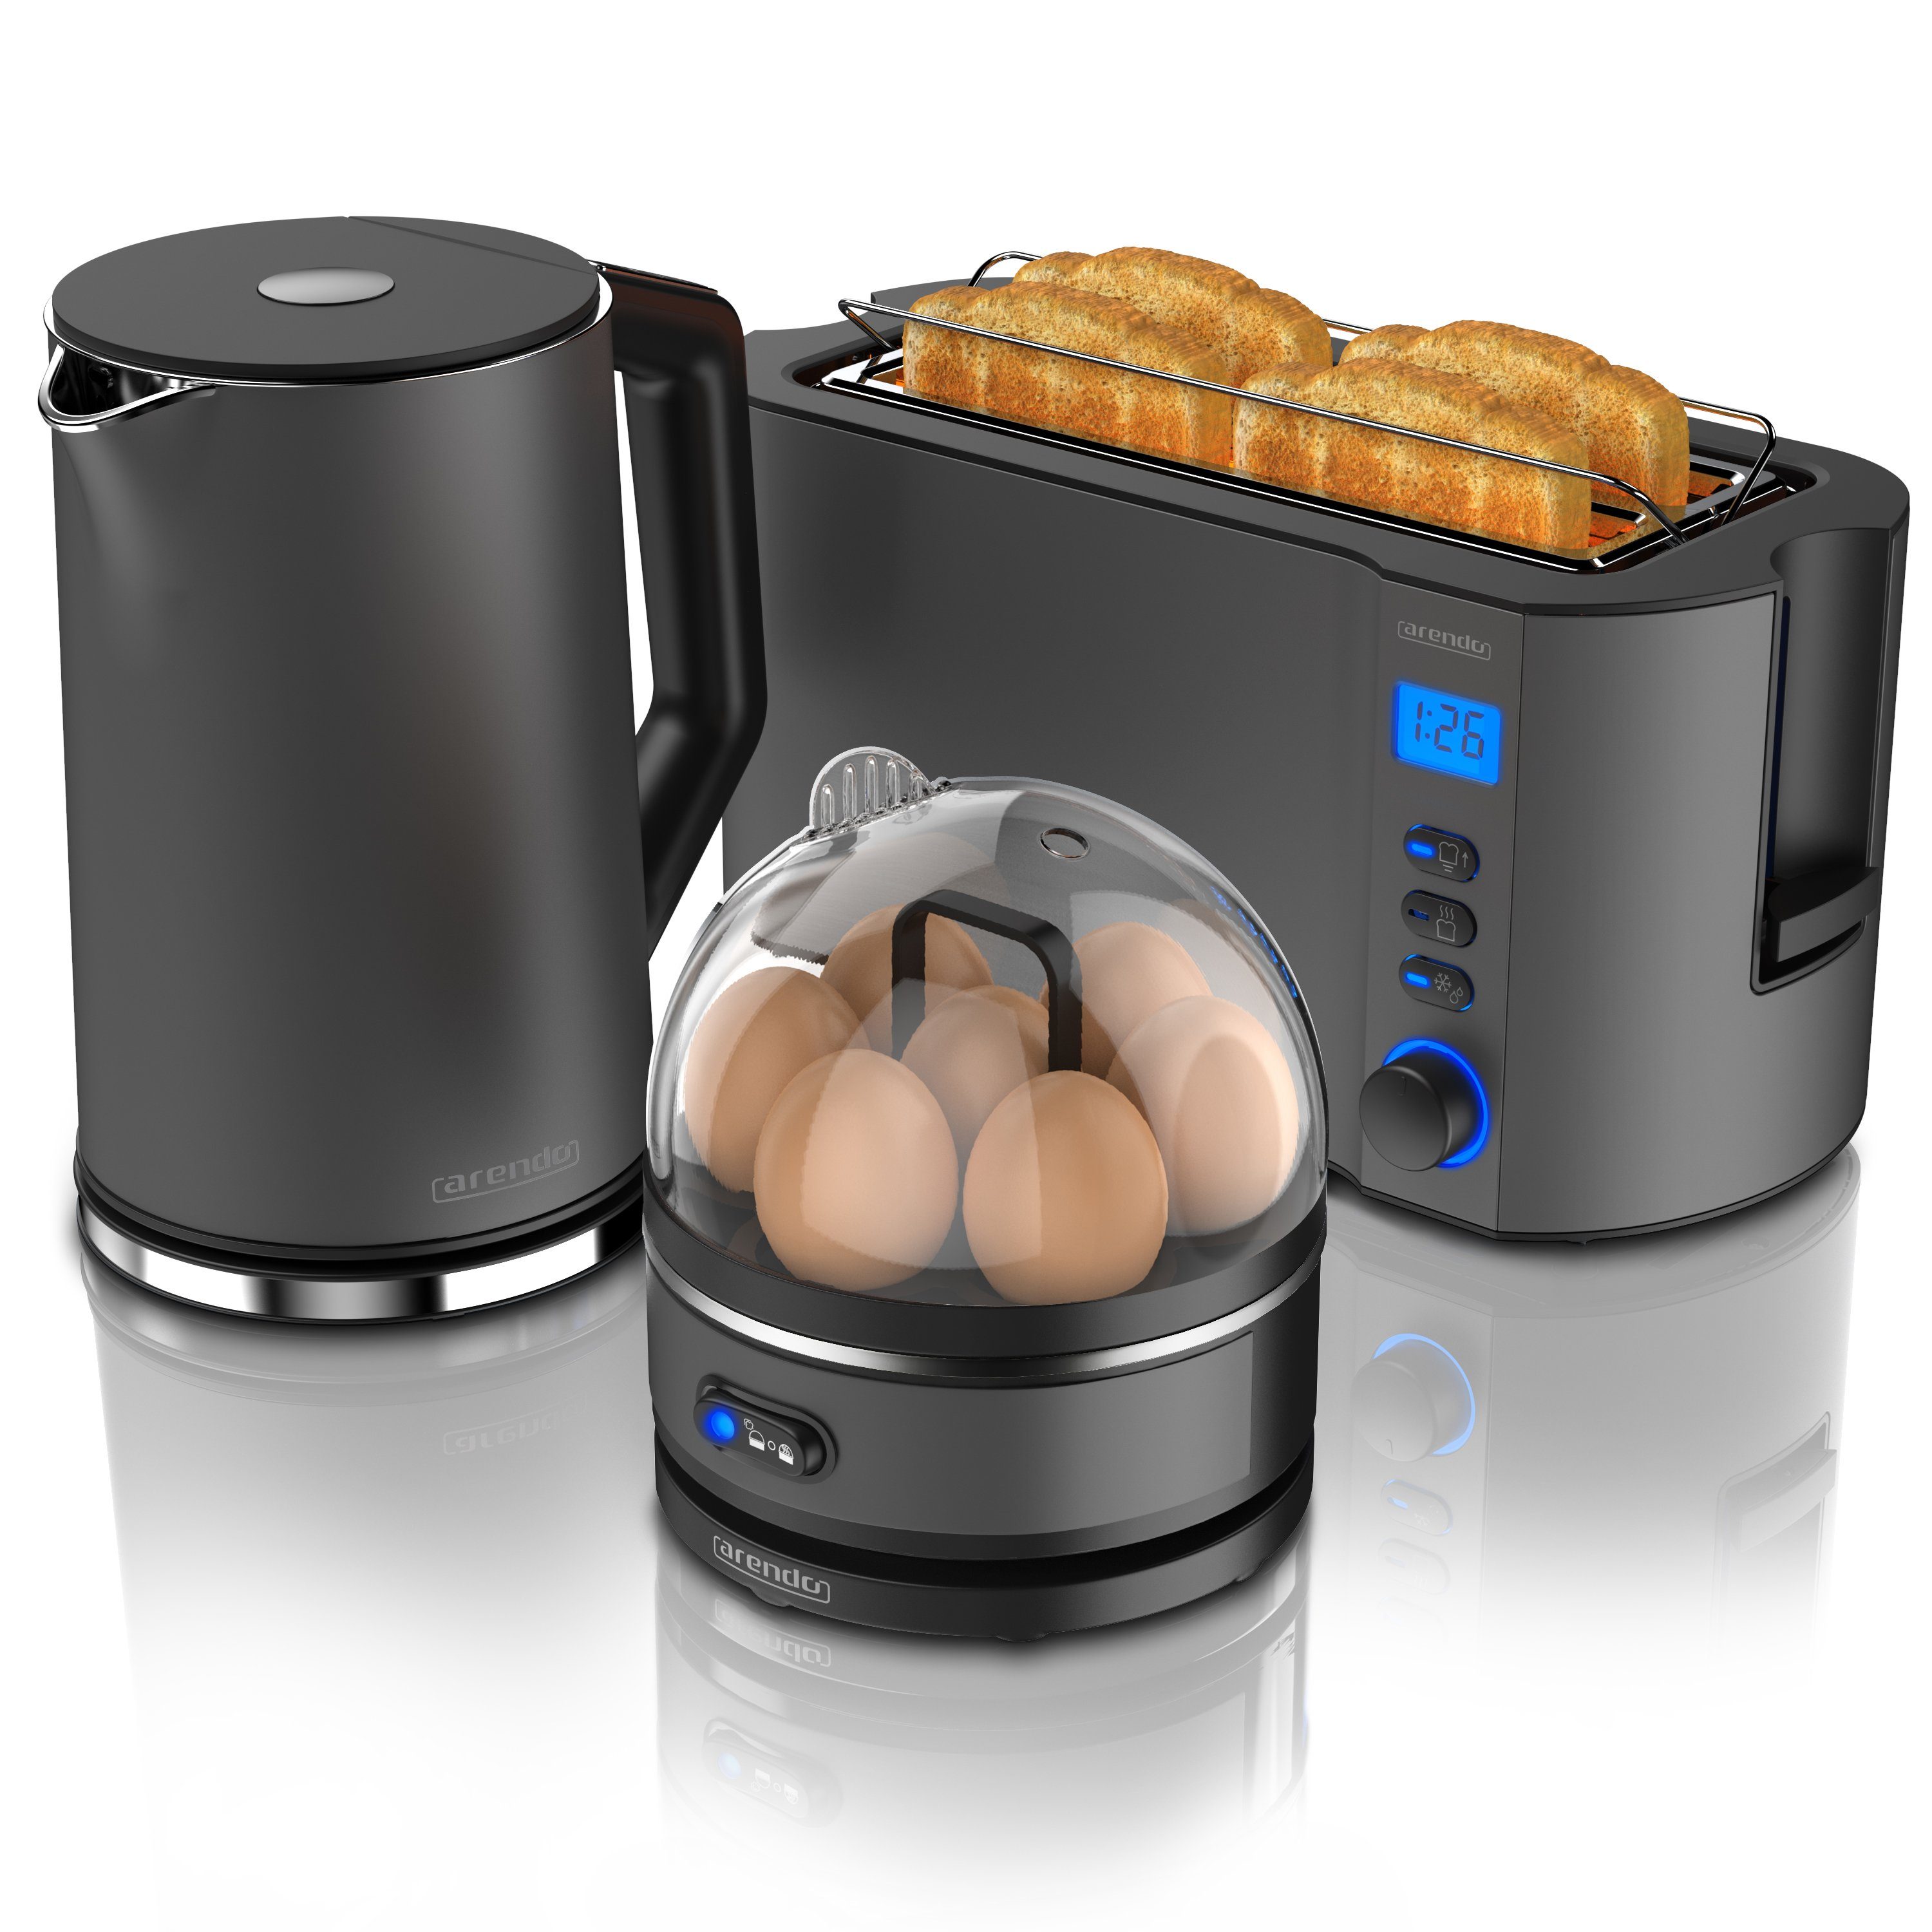 Arendo Frühstücks-Set (3-tlg), Wasserkocher 1,5l, 4-Scheiben Toaster, 7er Eierkocher, Grau